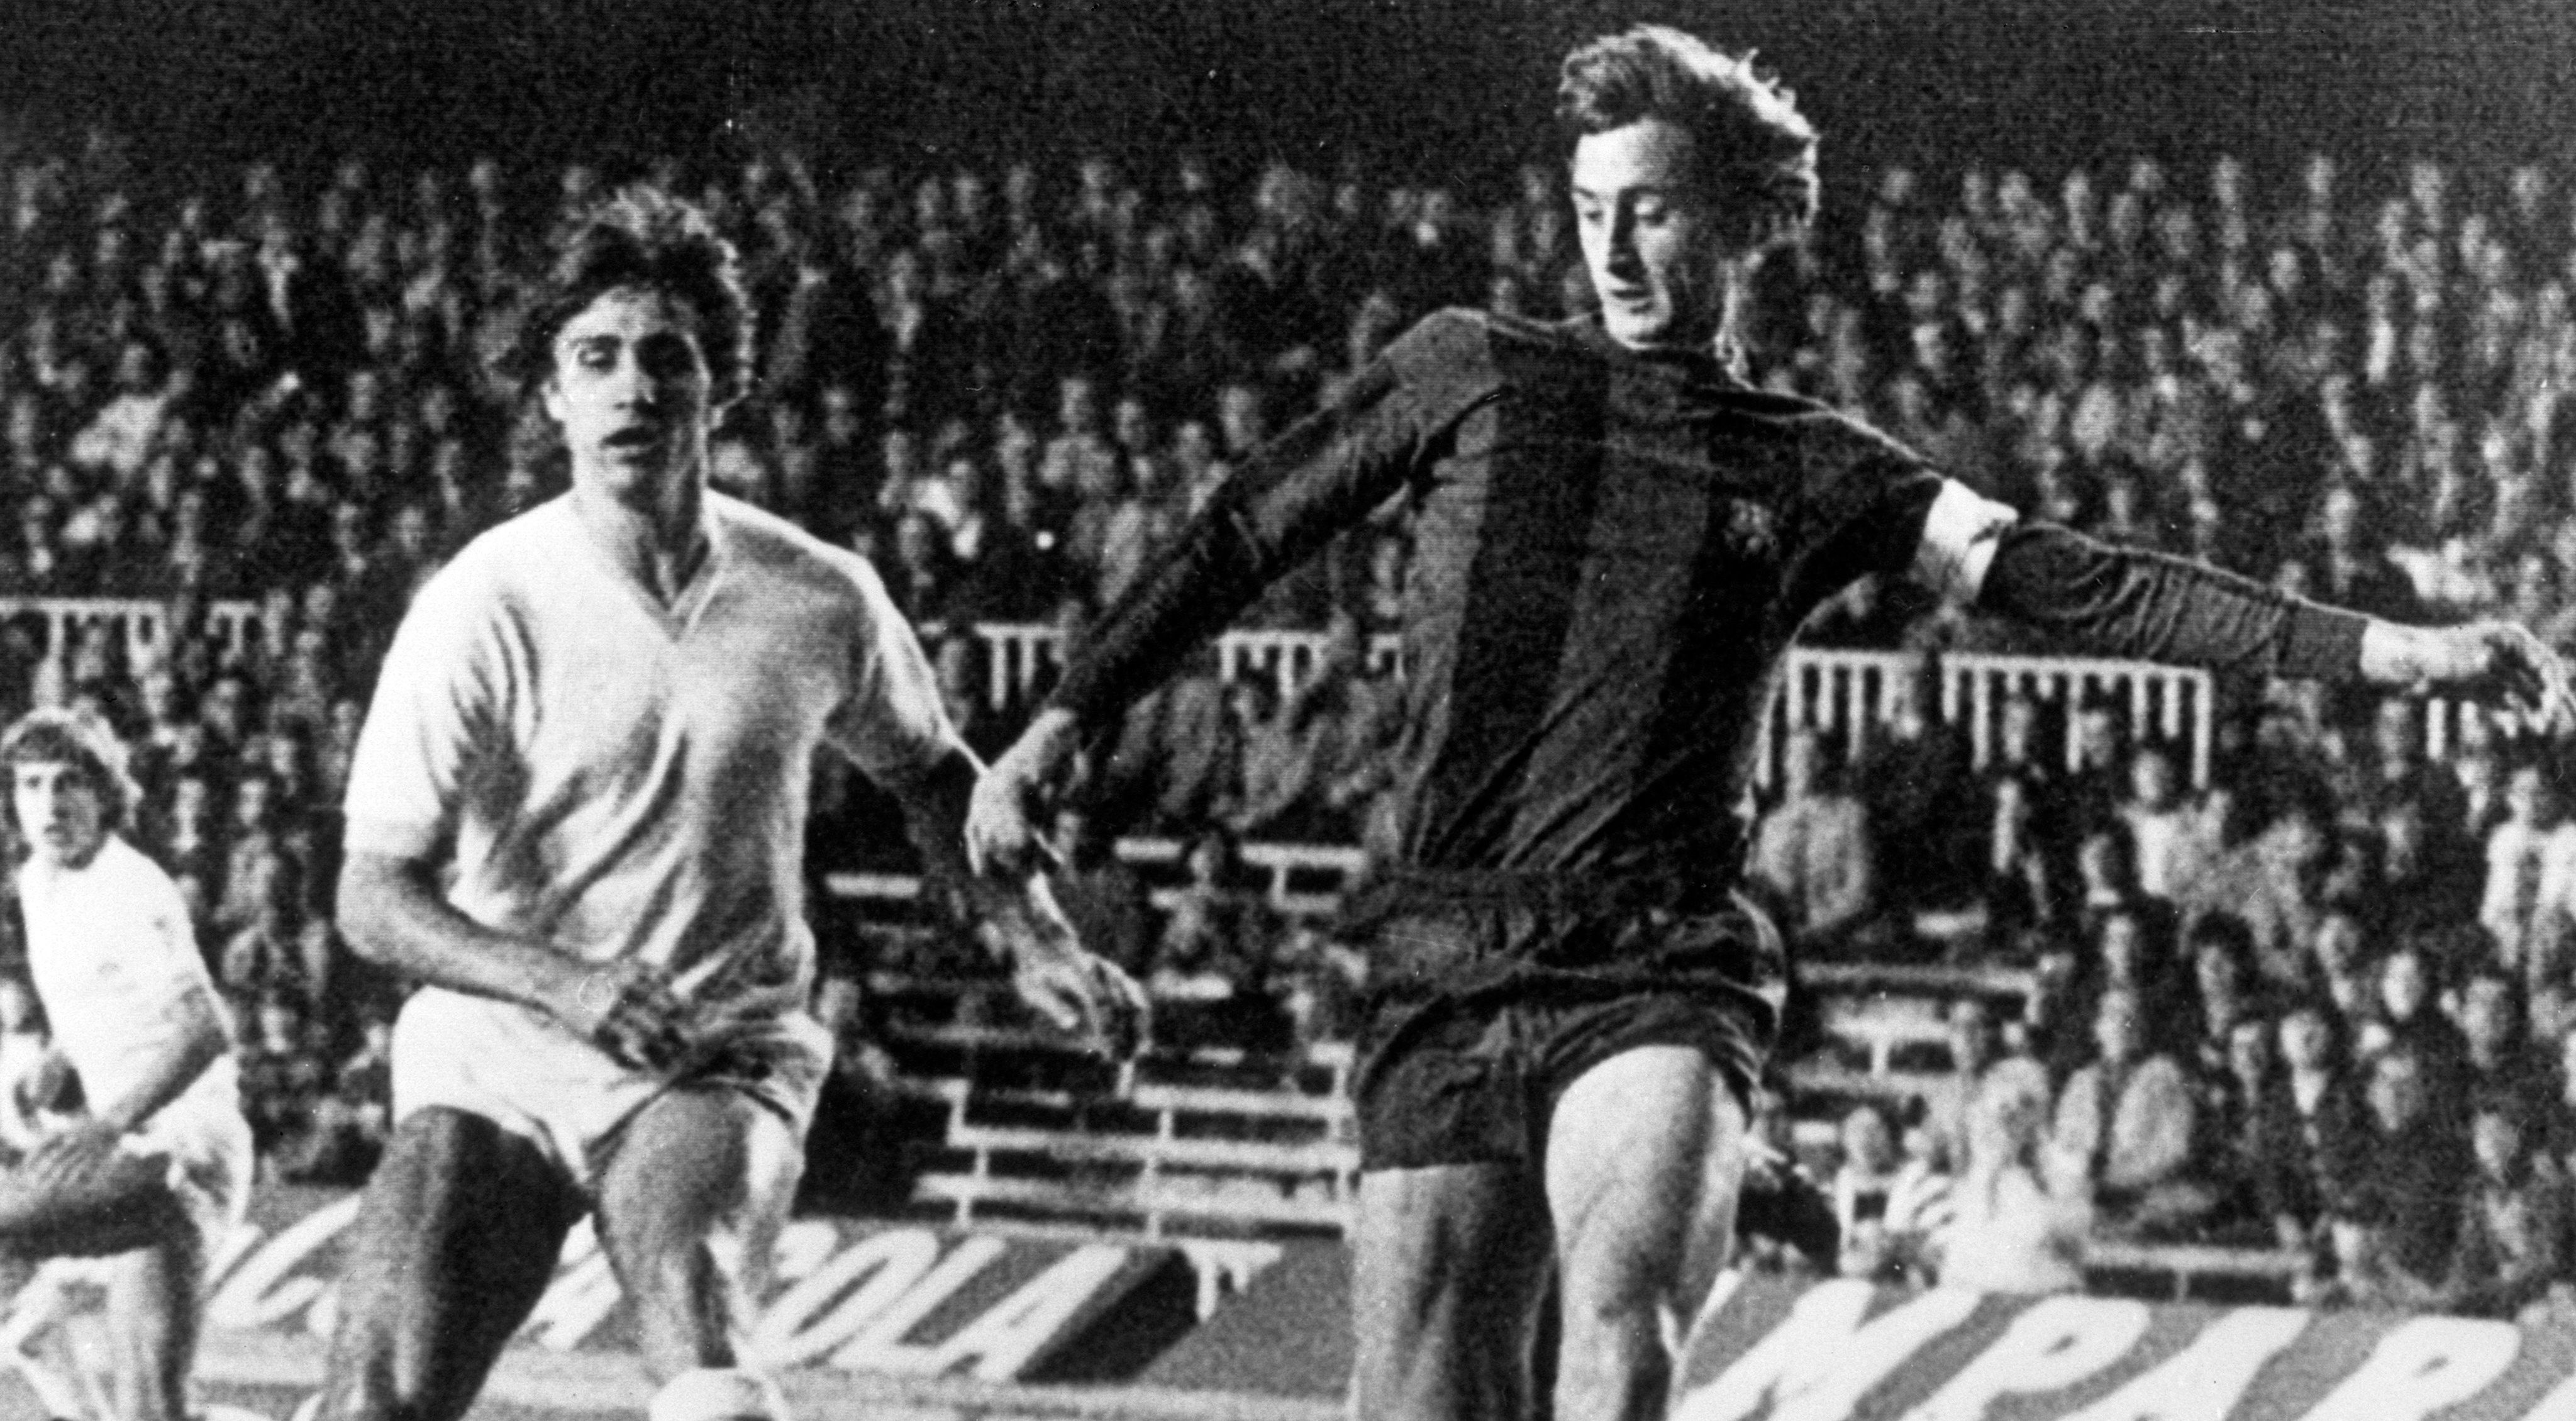 Johan Cruyff – the Dutch maestro who pioneered total football